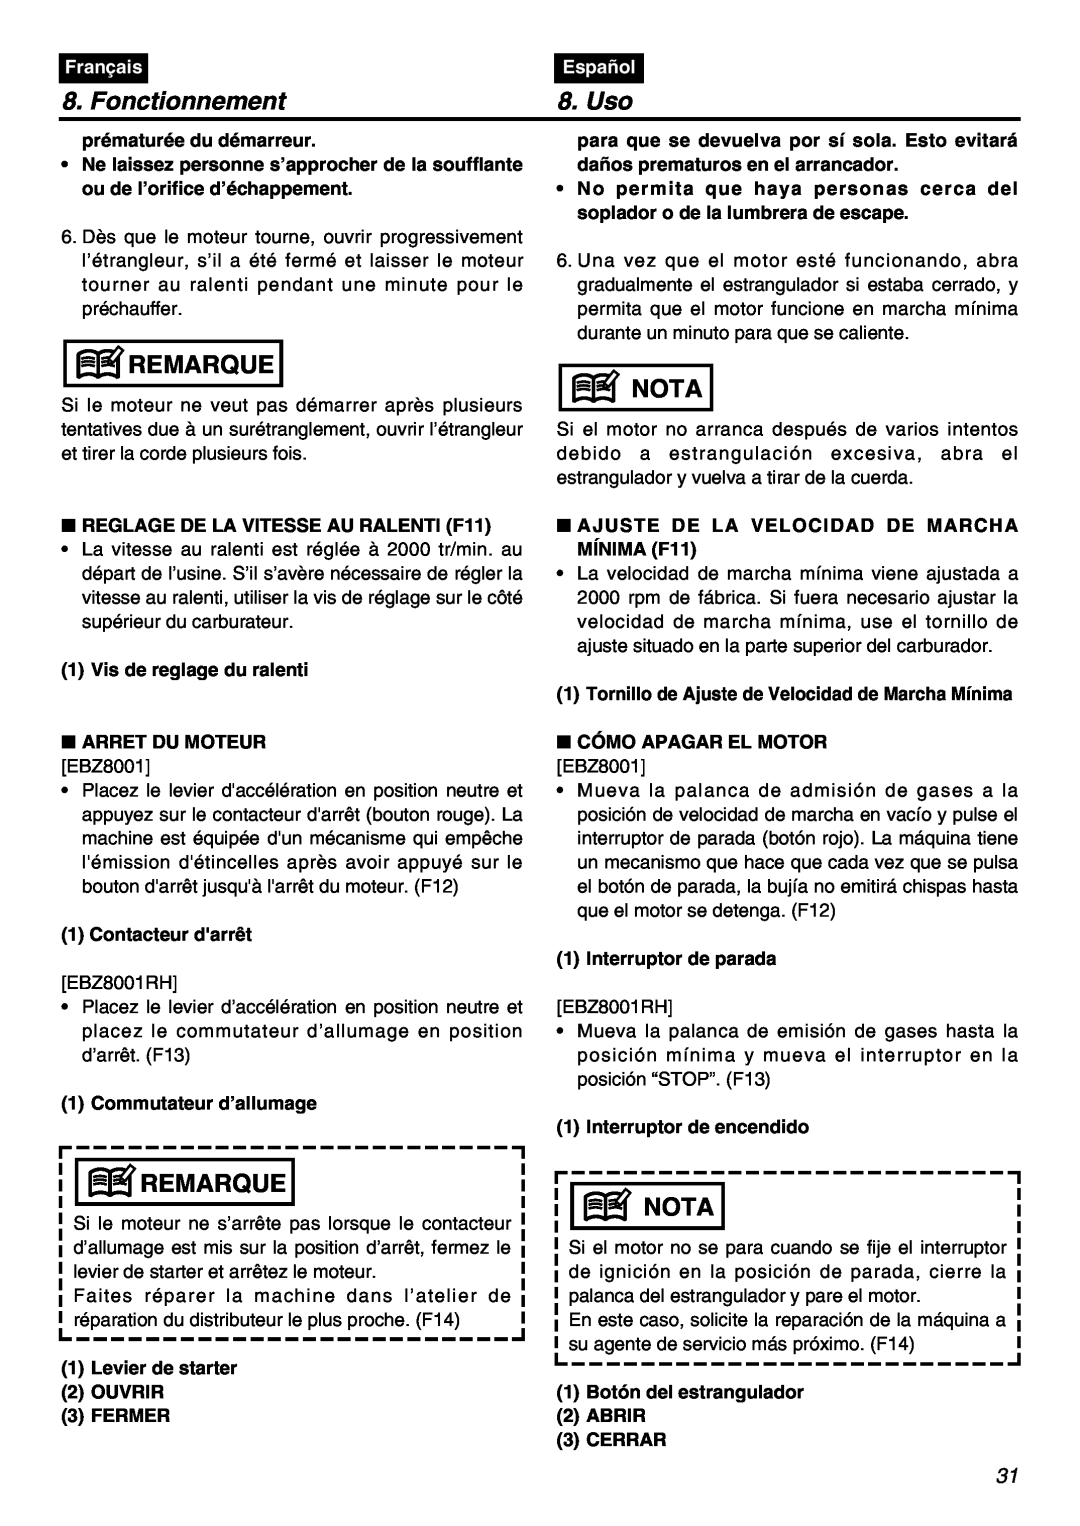 RedMax EBZ8001RH manual Fonctionnement, Uso, Remarque, Nota, Français, Español 